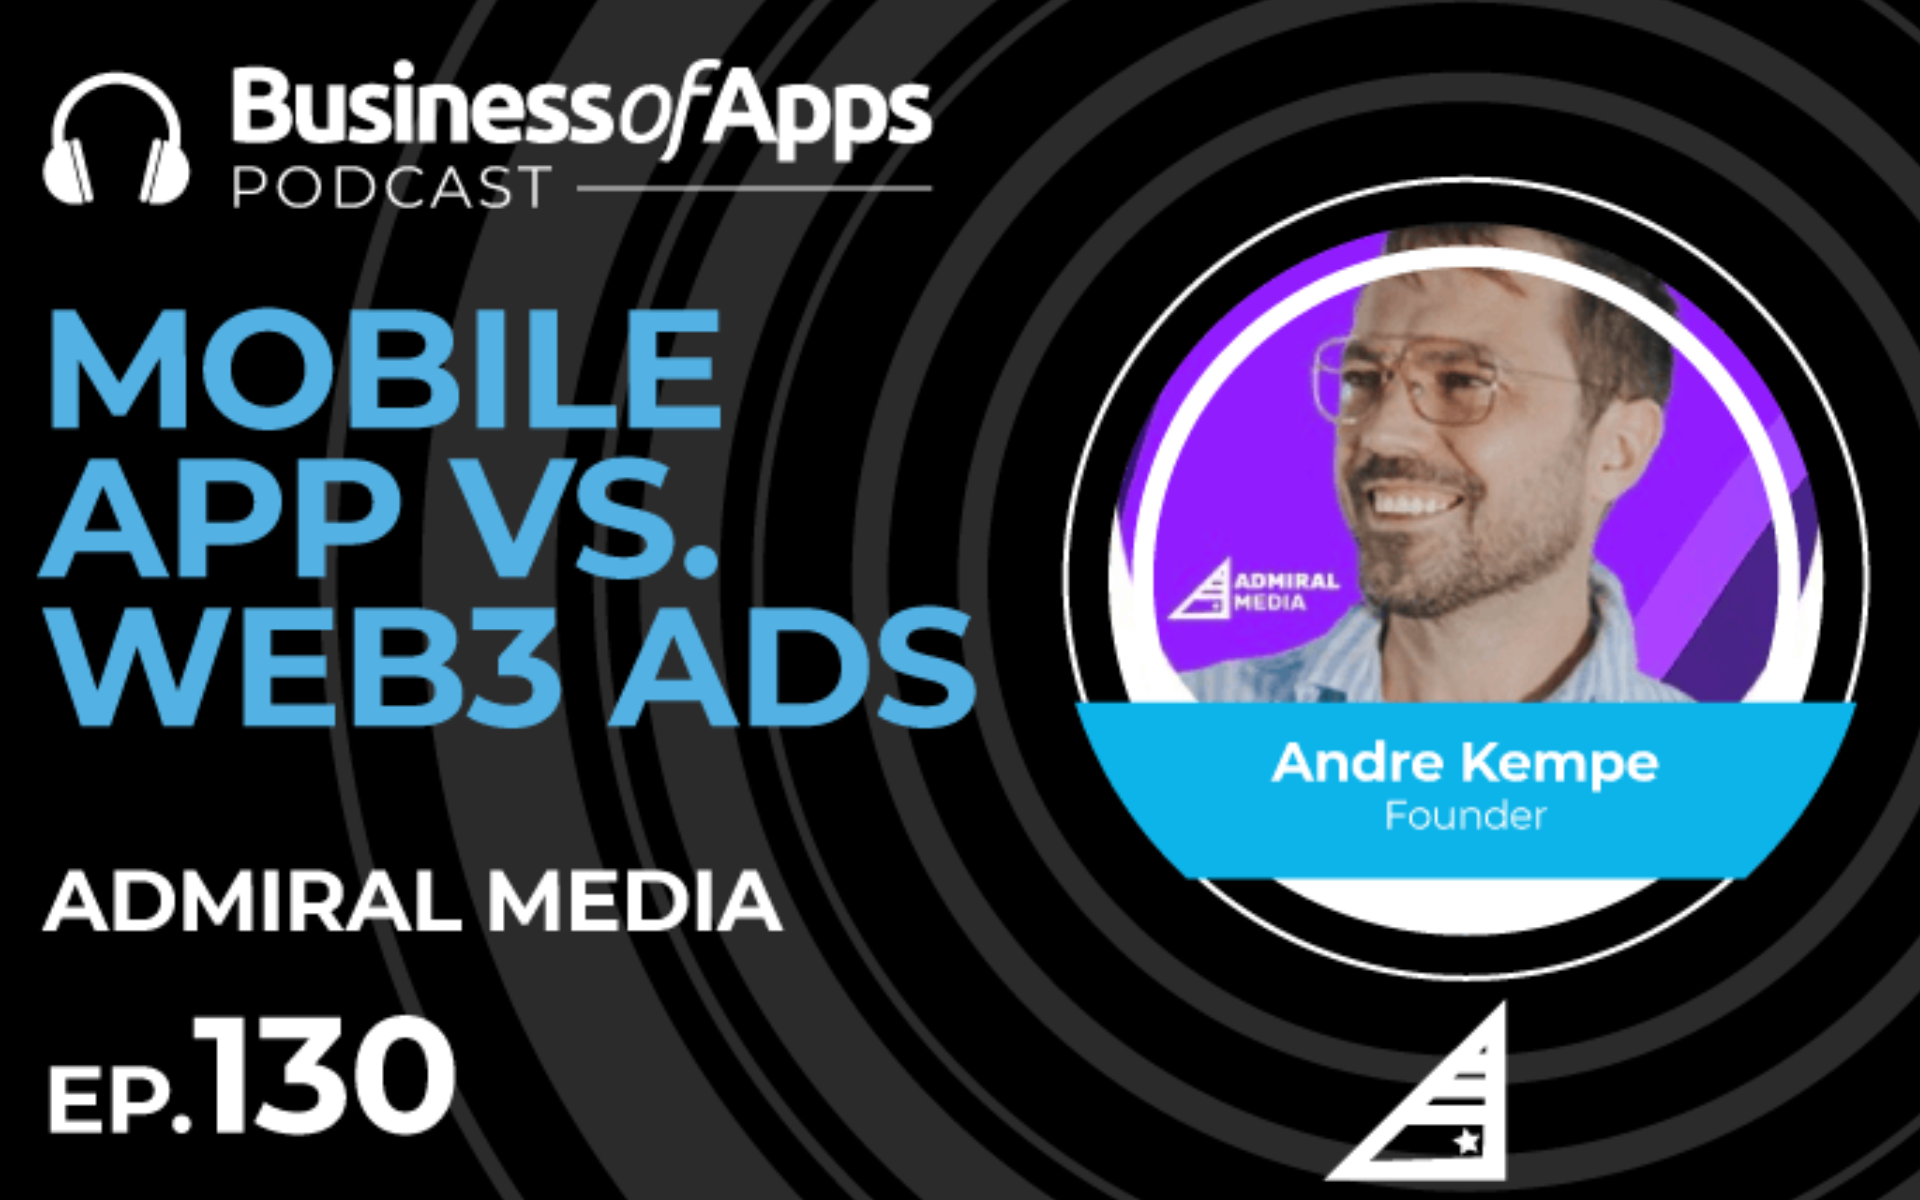 Mobile App vs. Web3 ads